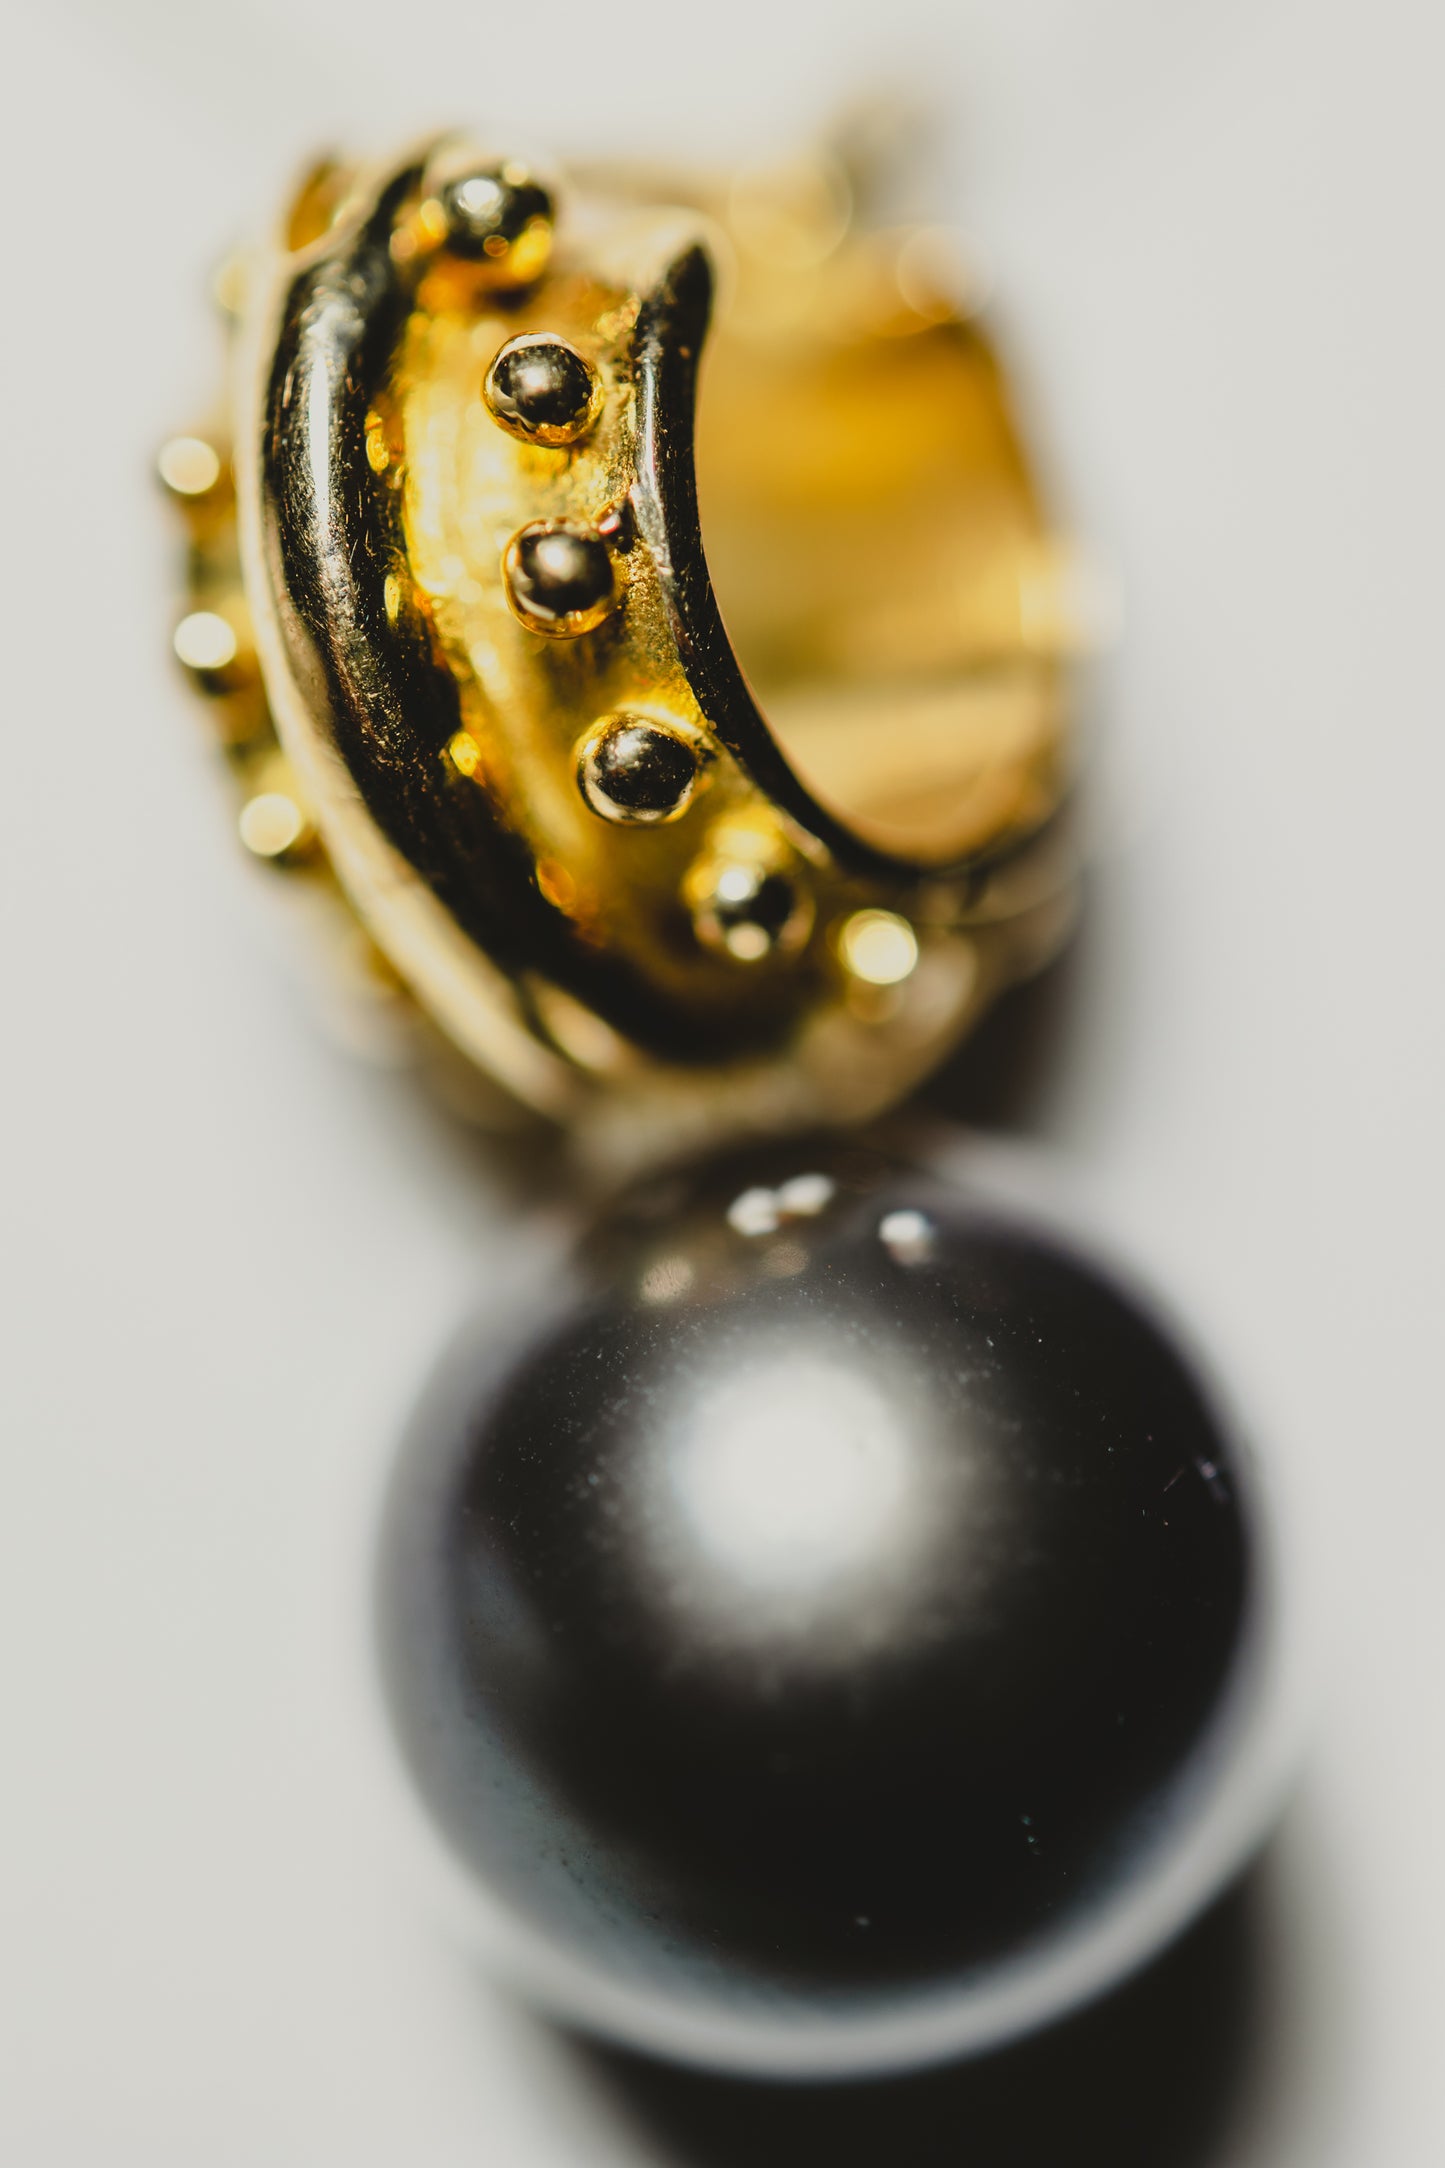 South Sea Black Pearl & Gold Earrings